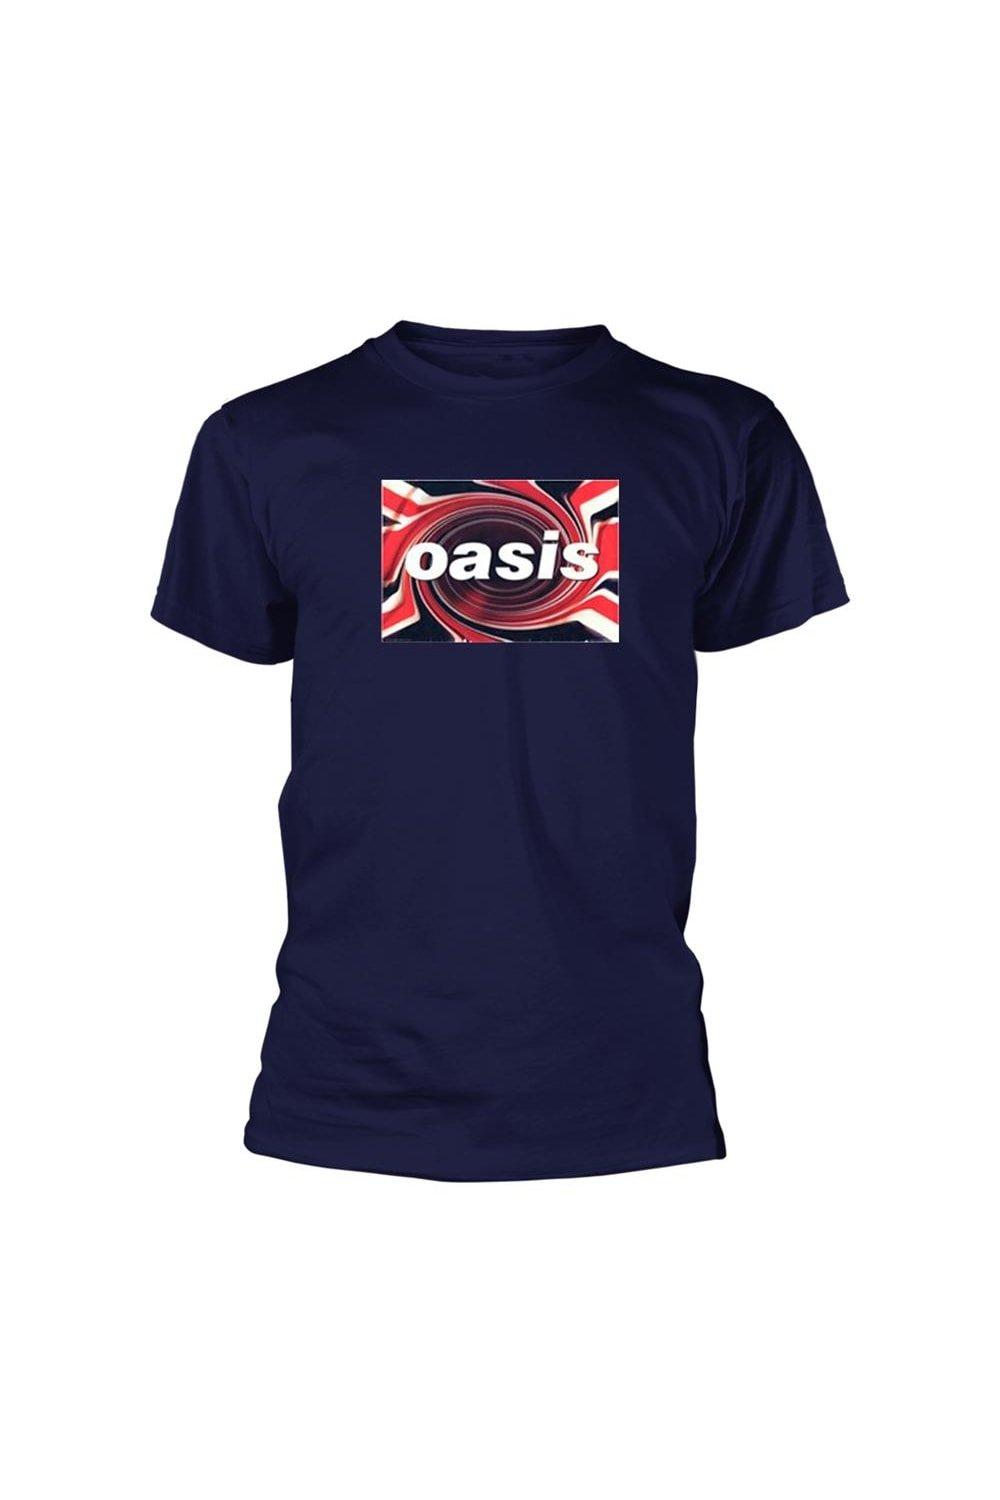 T-Shirts | Union Jack T-Shirt | Oasis